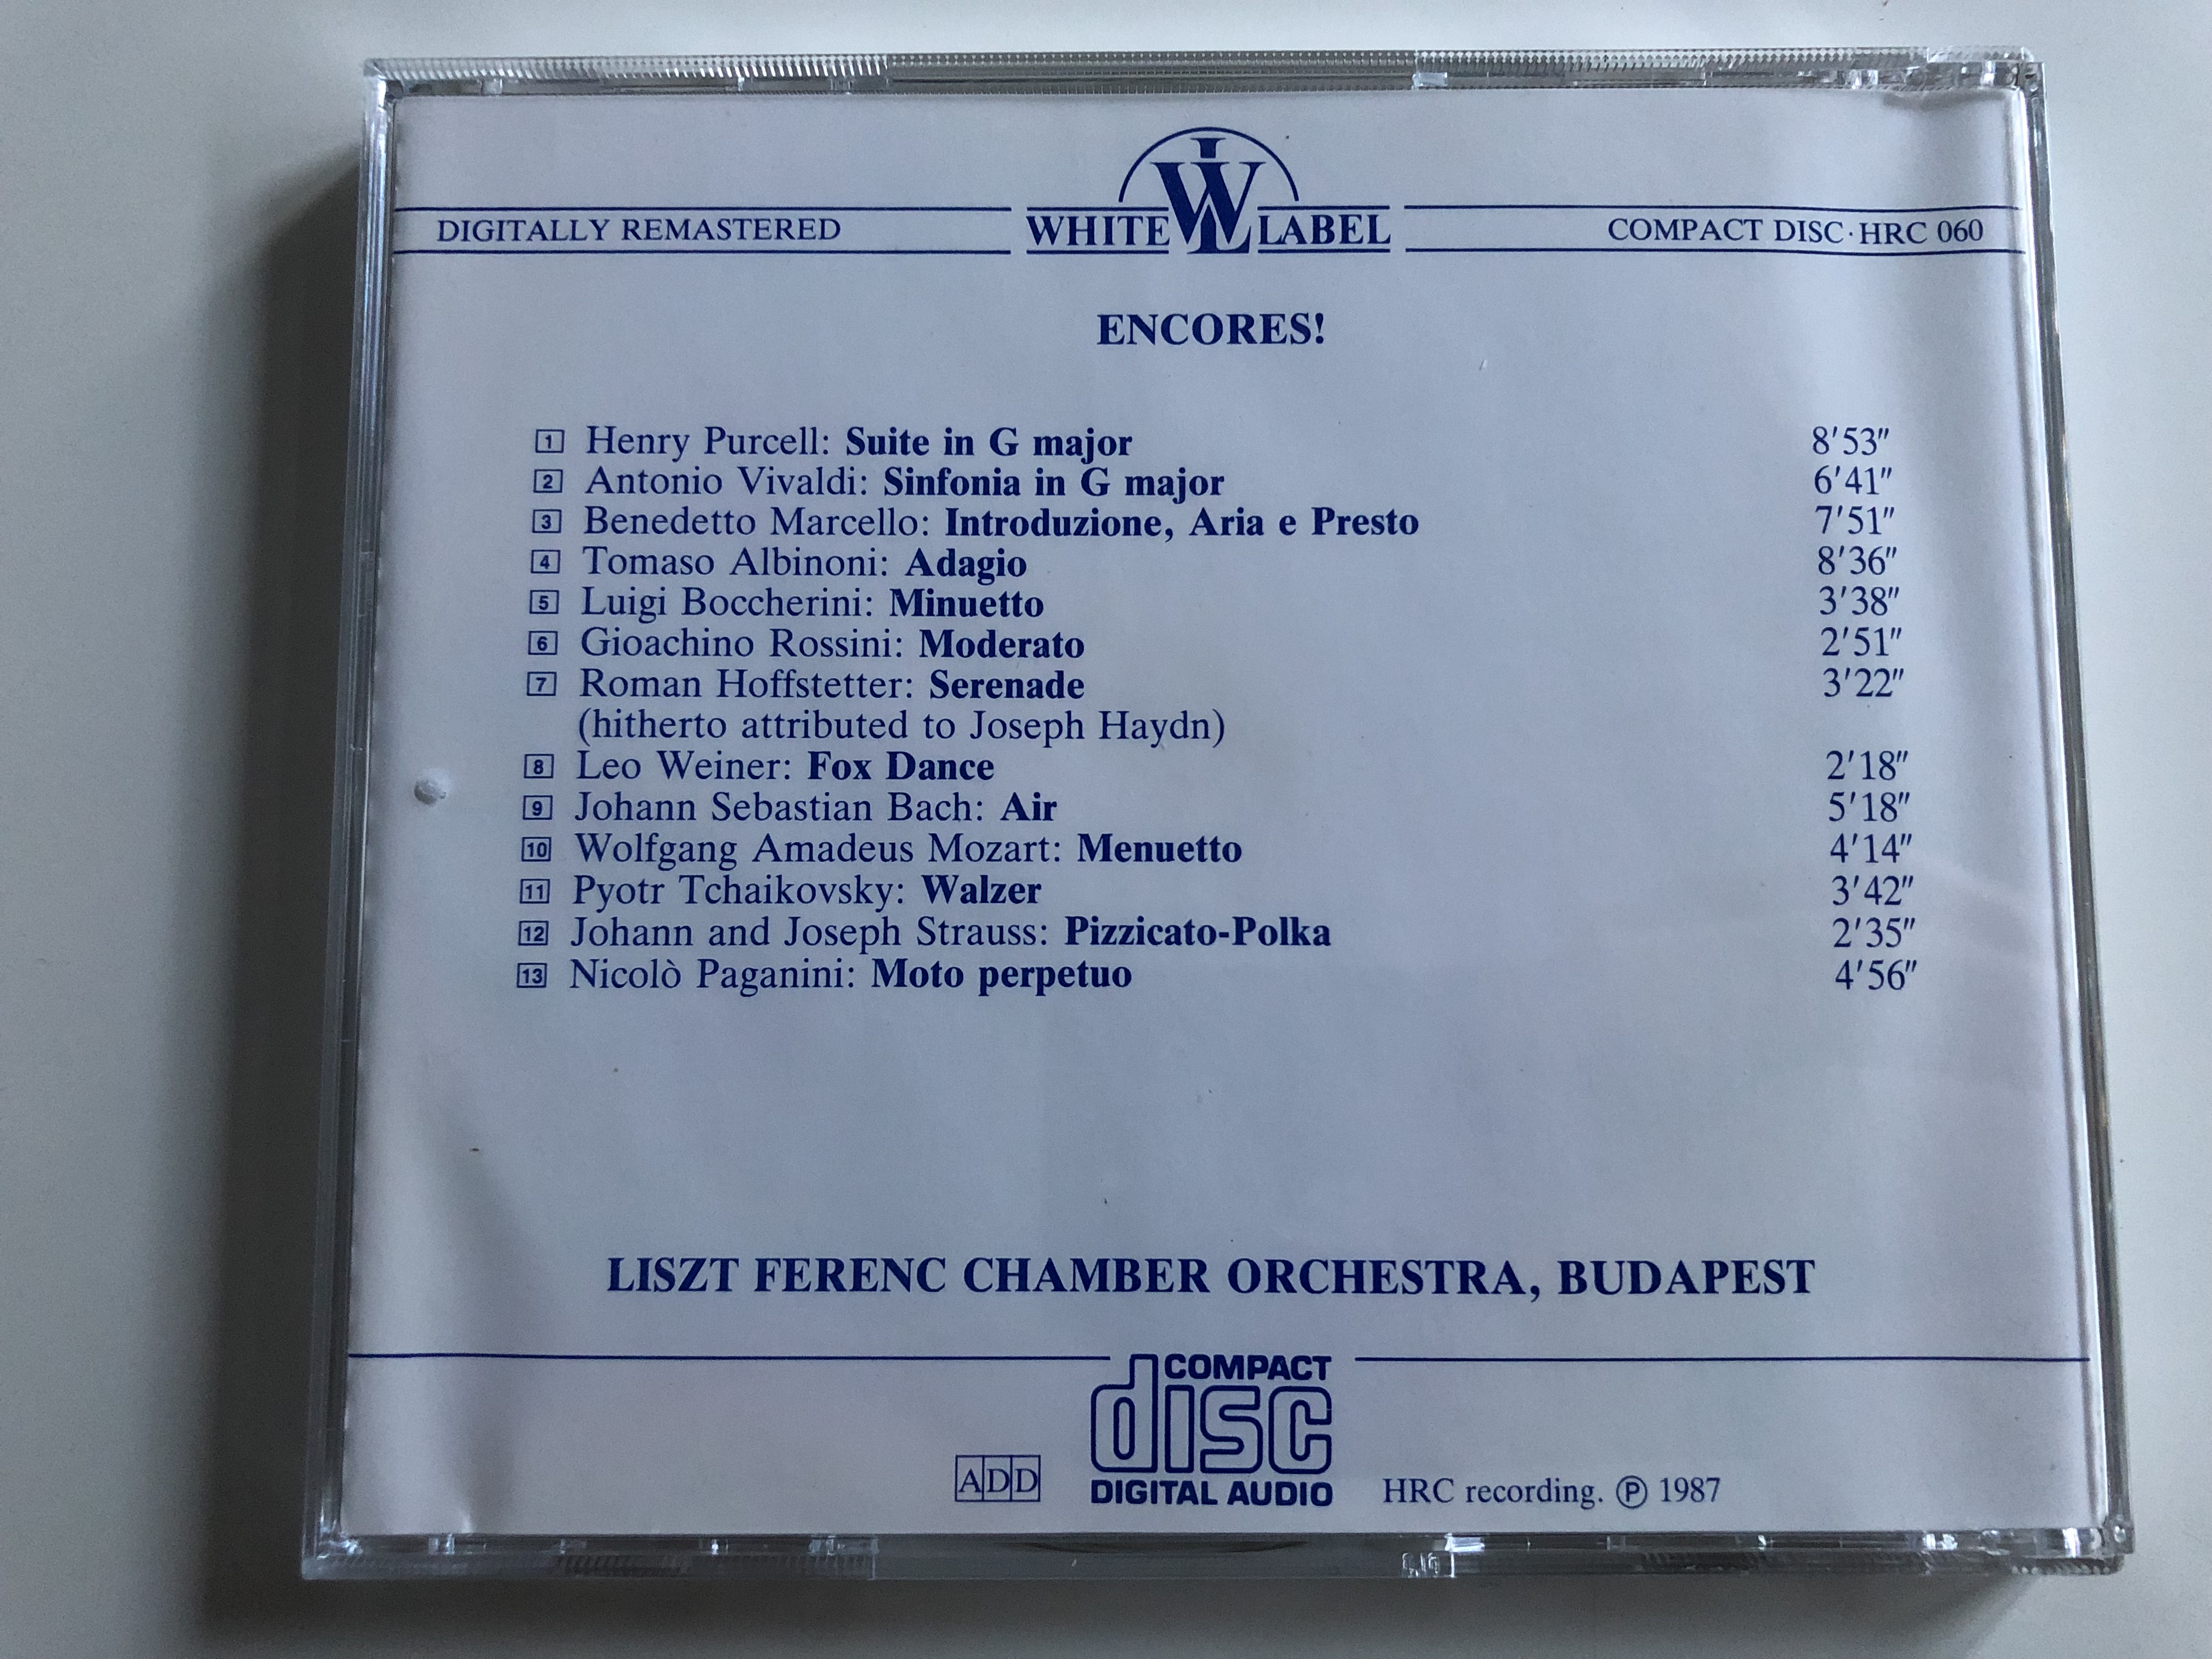 encores-albinoni-adagio-bach-air-j.-strauss-pizzicato-polka-paganini-moto-perpetuo-liszt-ferenc-chamber-orchestra-conudcted-by-j-nos-rolla-hungaroton-audio-cd-1987-hrc-060-7-.jpg